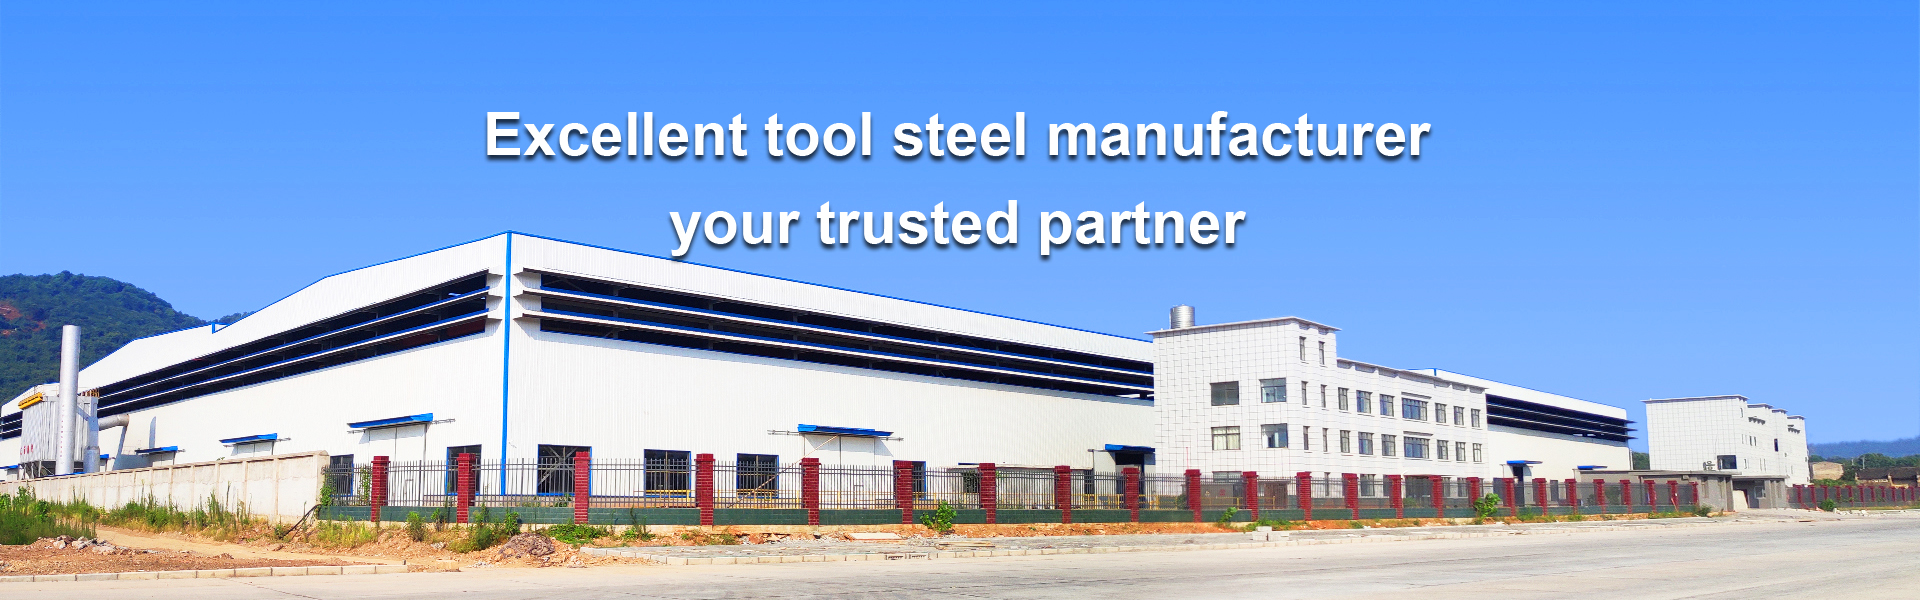 Excellent tool steel manufacturer your trusted partner